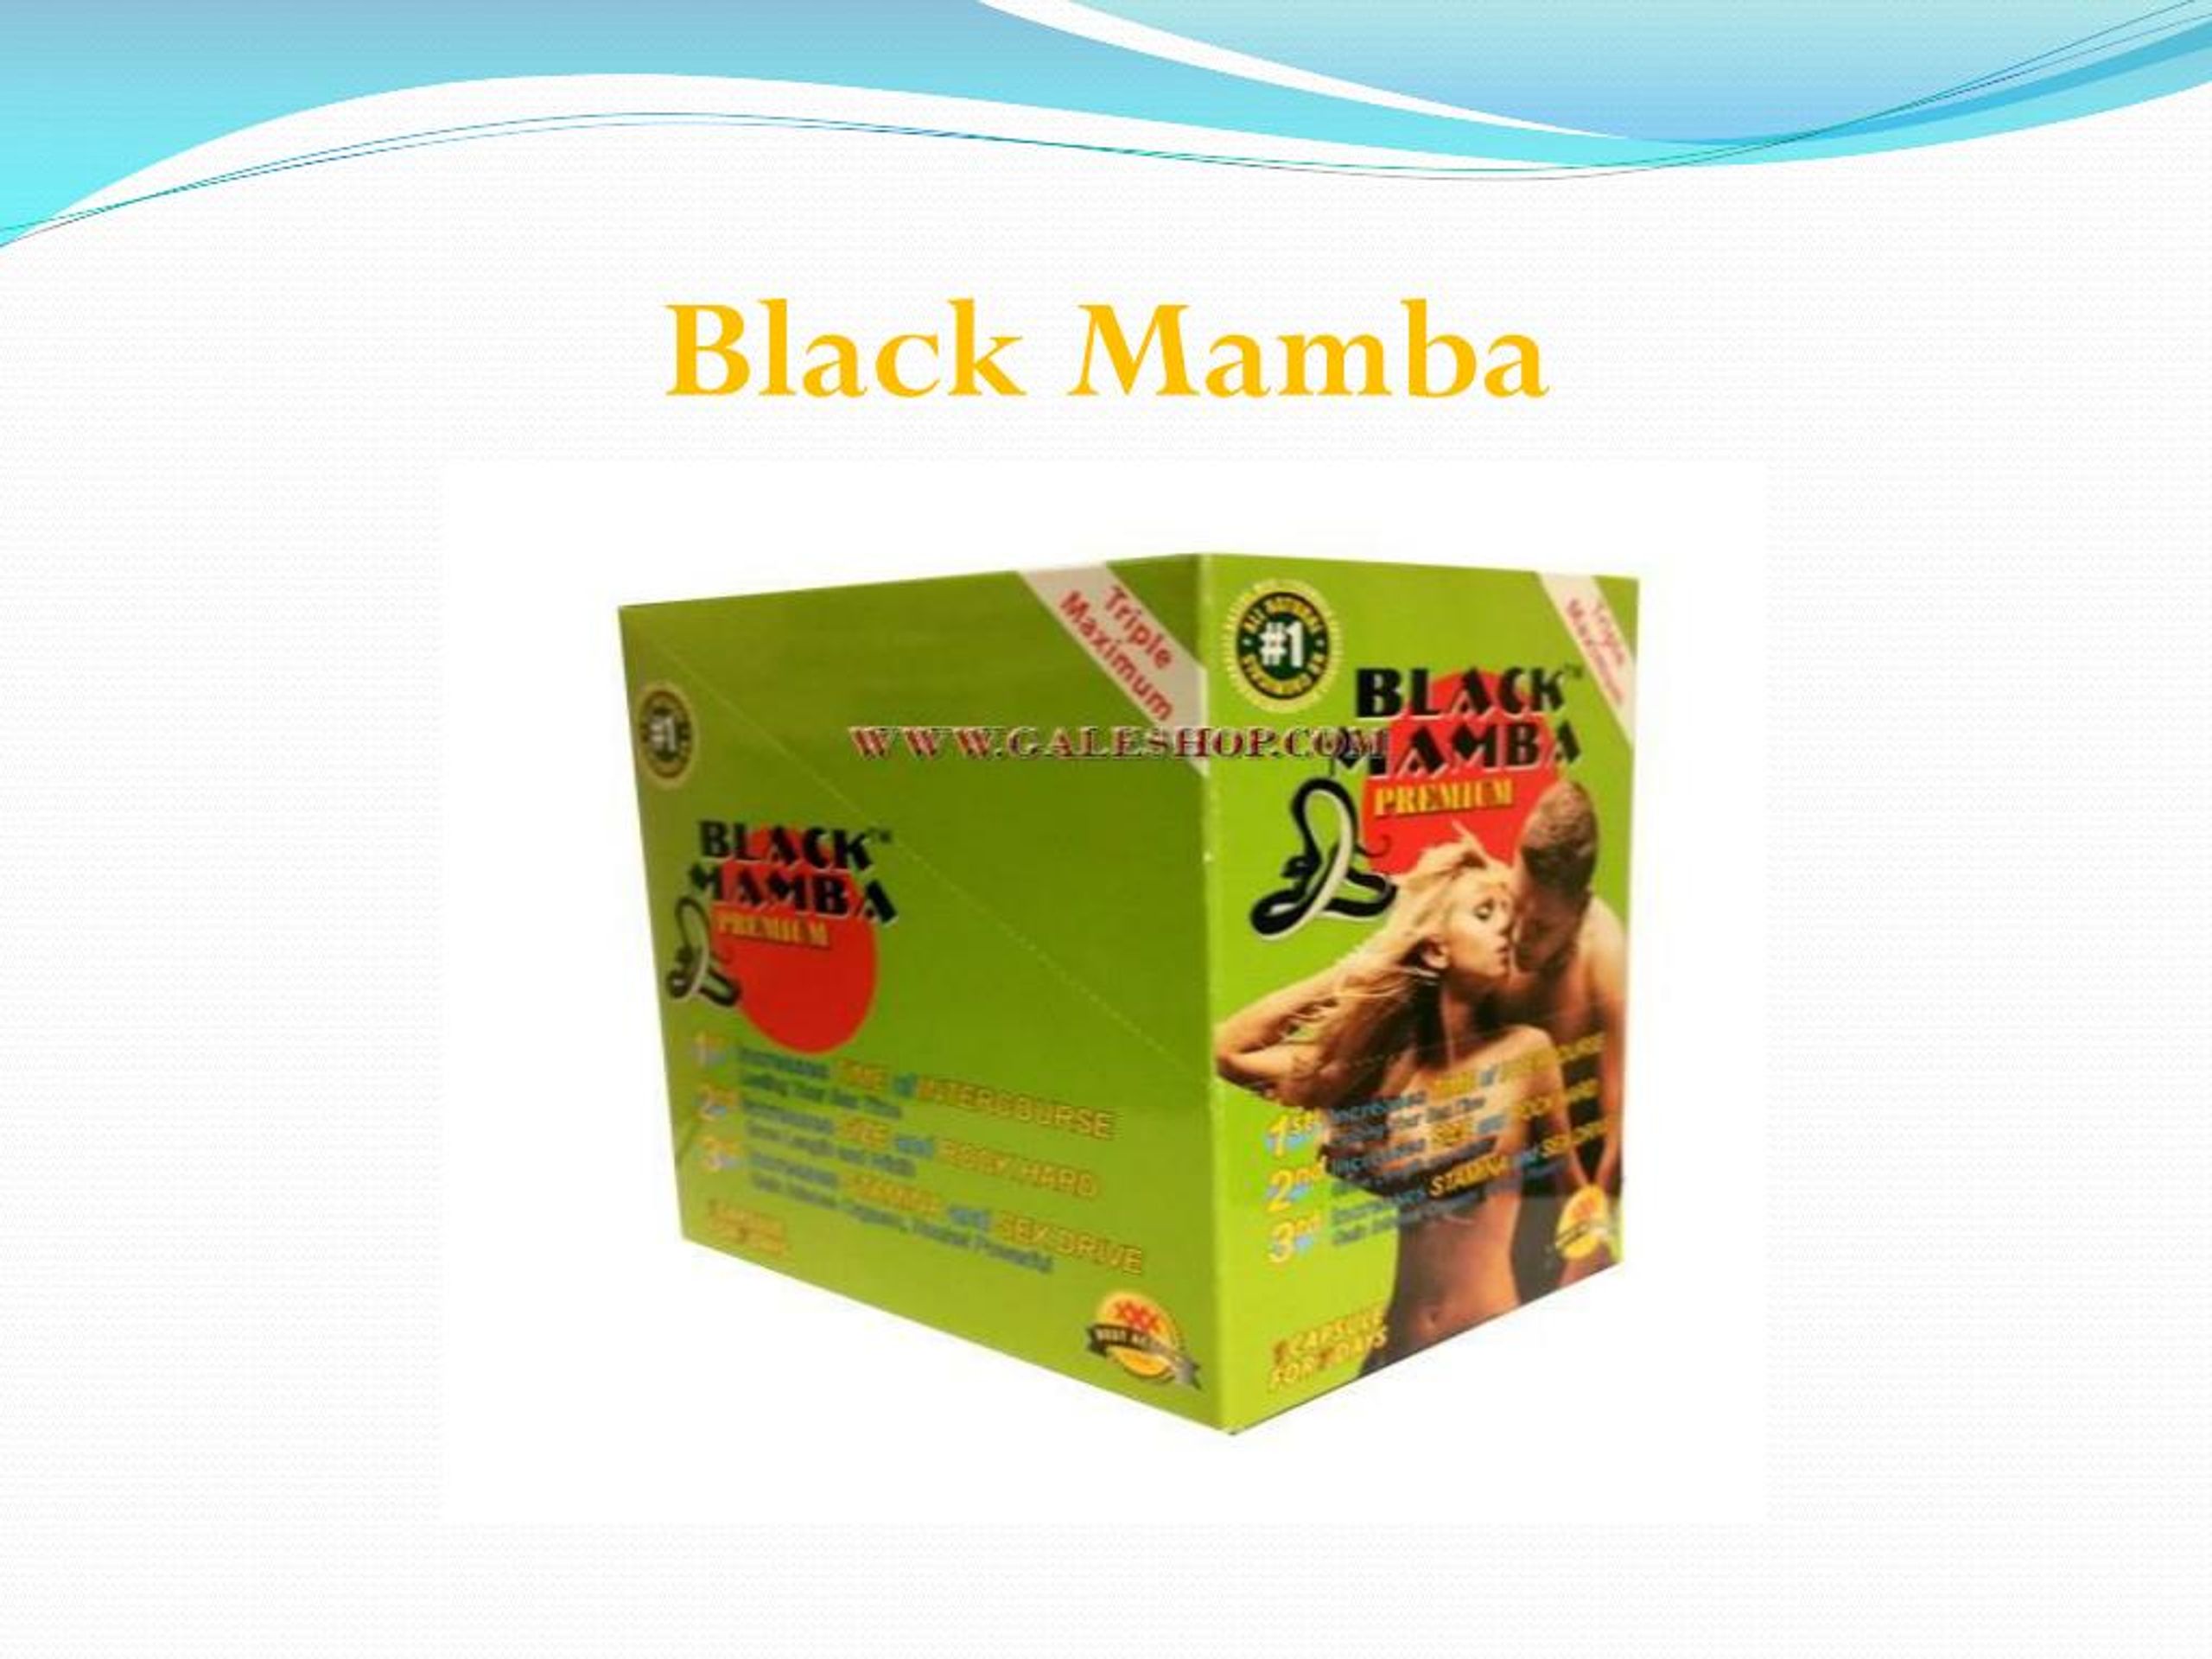 PPT - Stree Overlord, Rhino Pills, Black Mamba Pill - Buy It Online ...